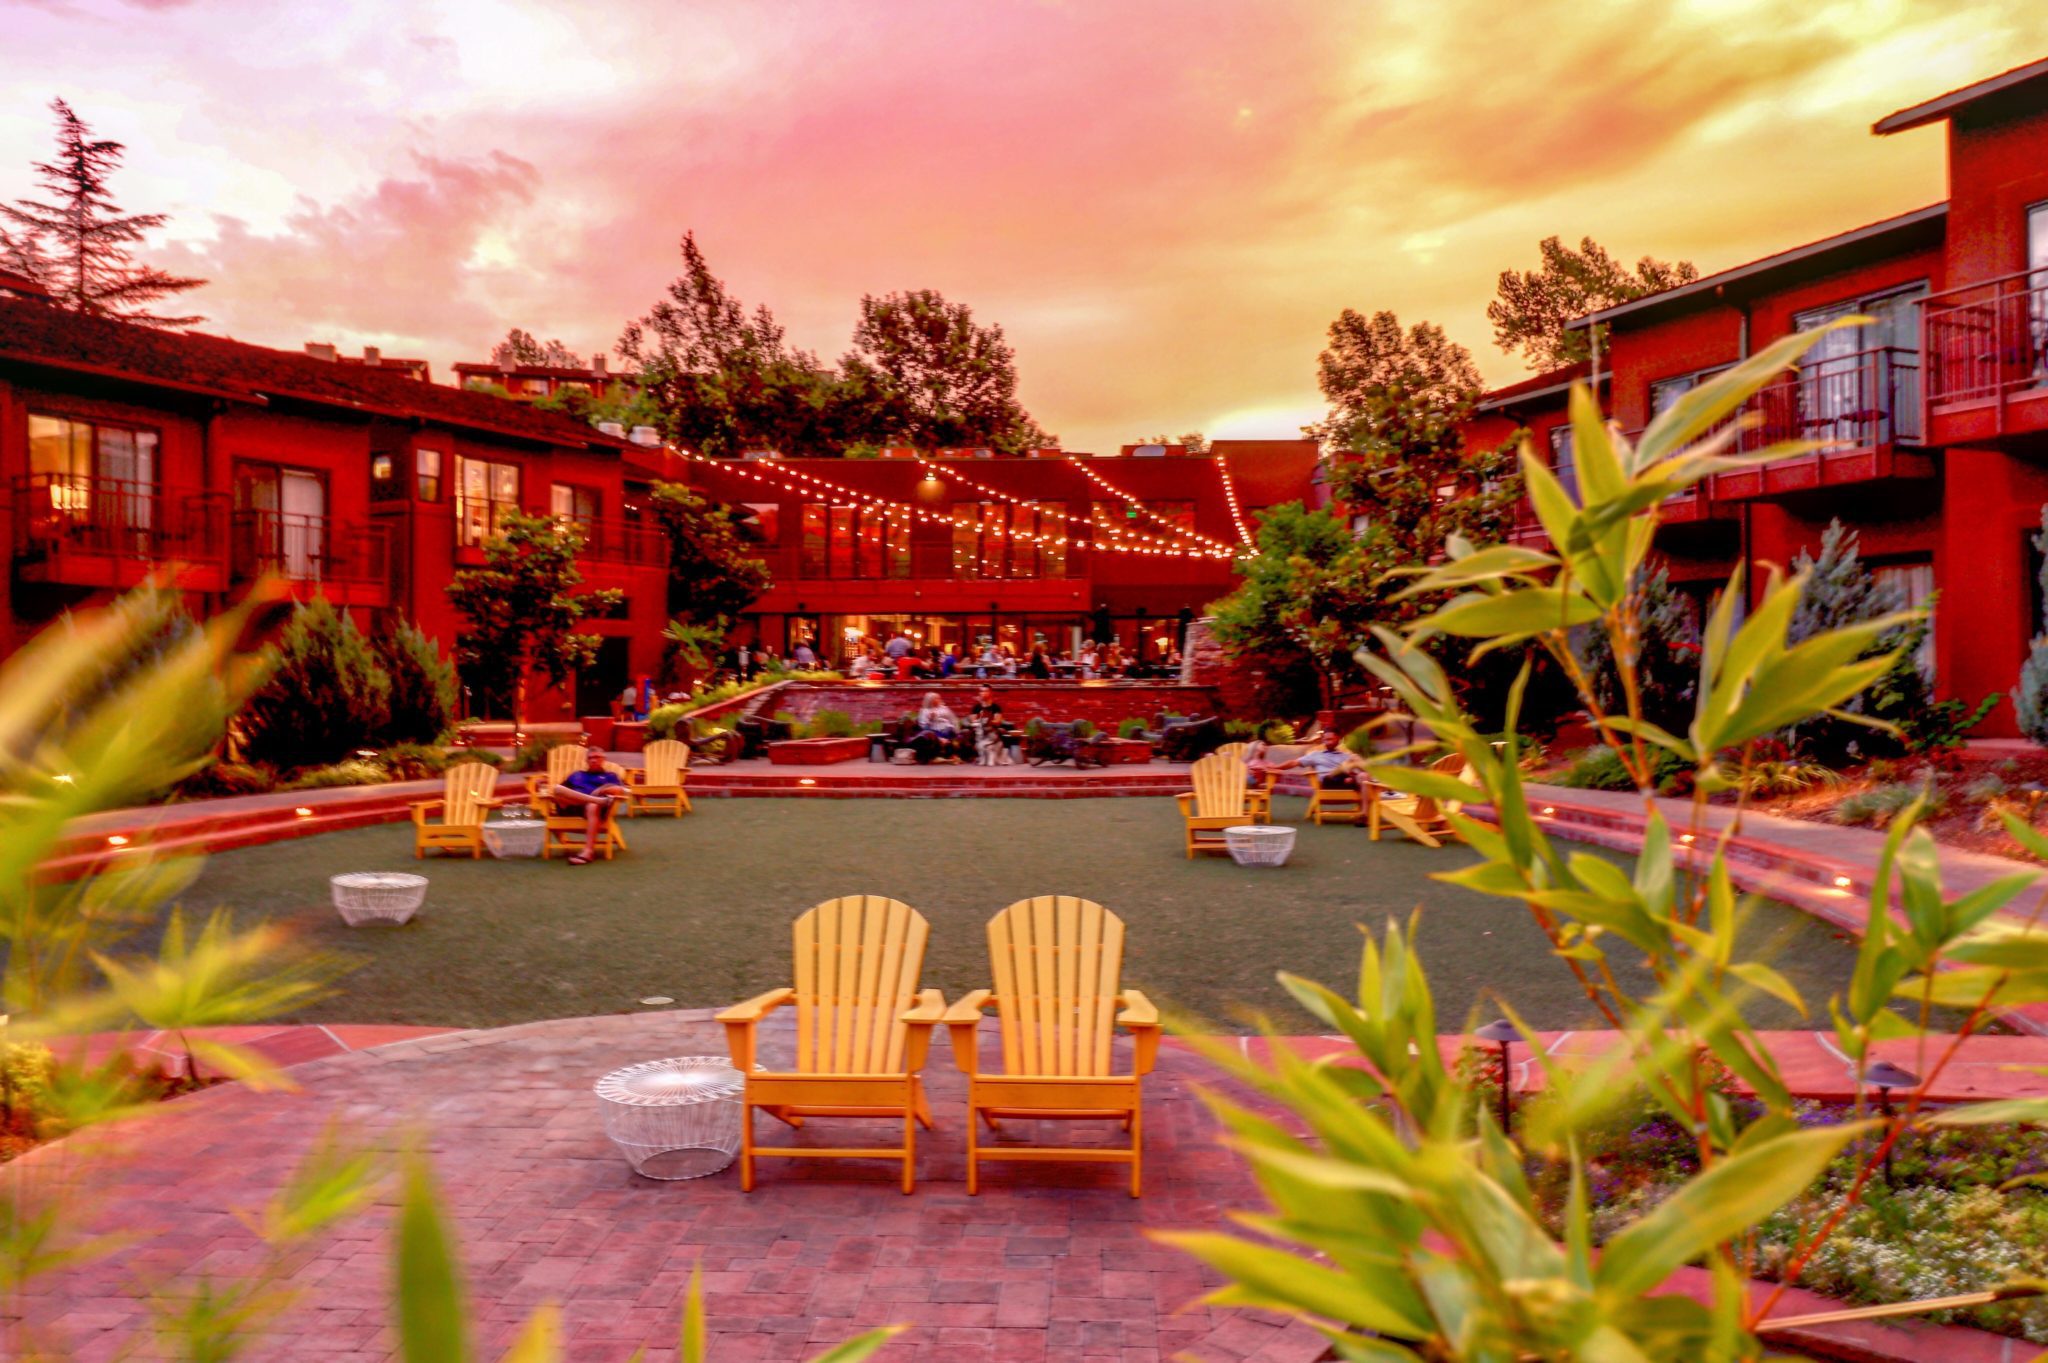 Amara Resort and Spa